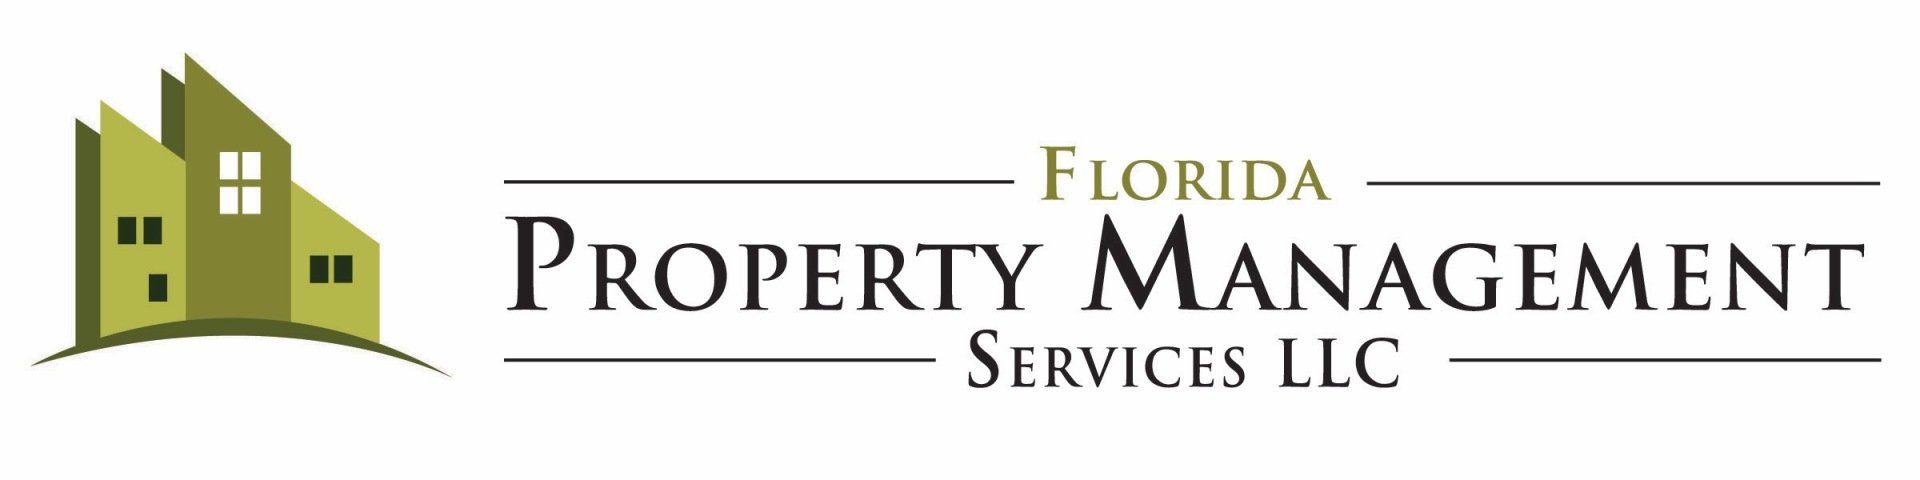 Florida Property Management Services LLC Logo